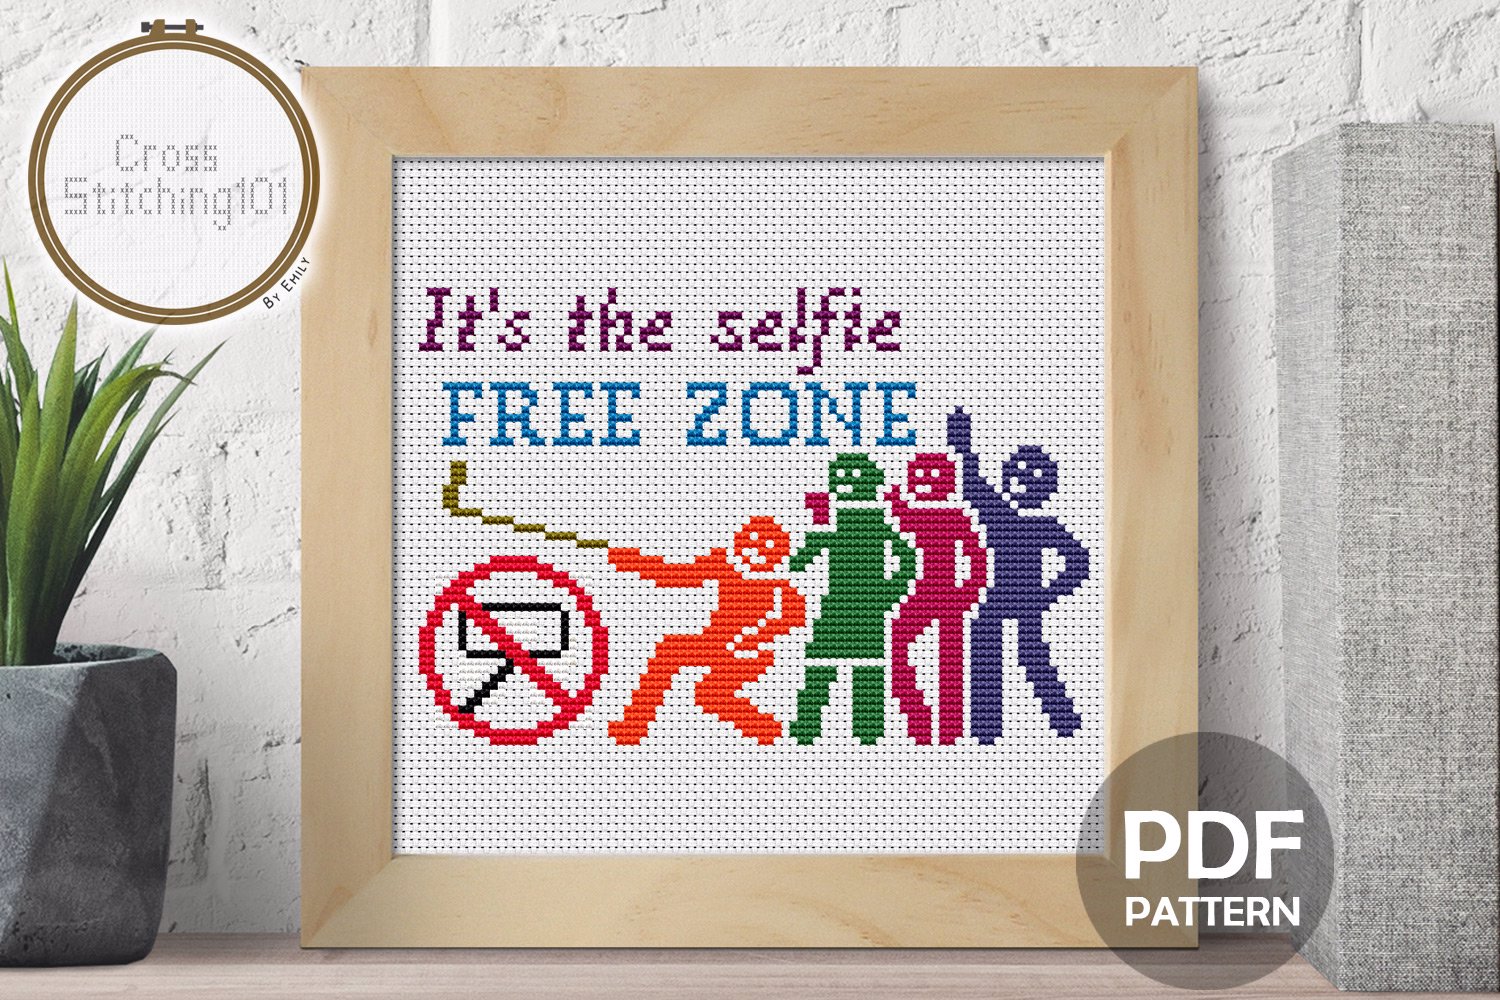 It's The Selfie Free Zone Cross Stitch Chart